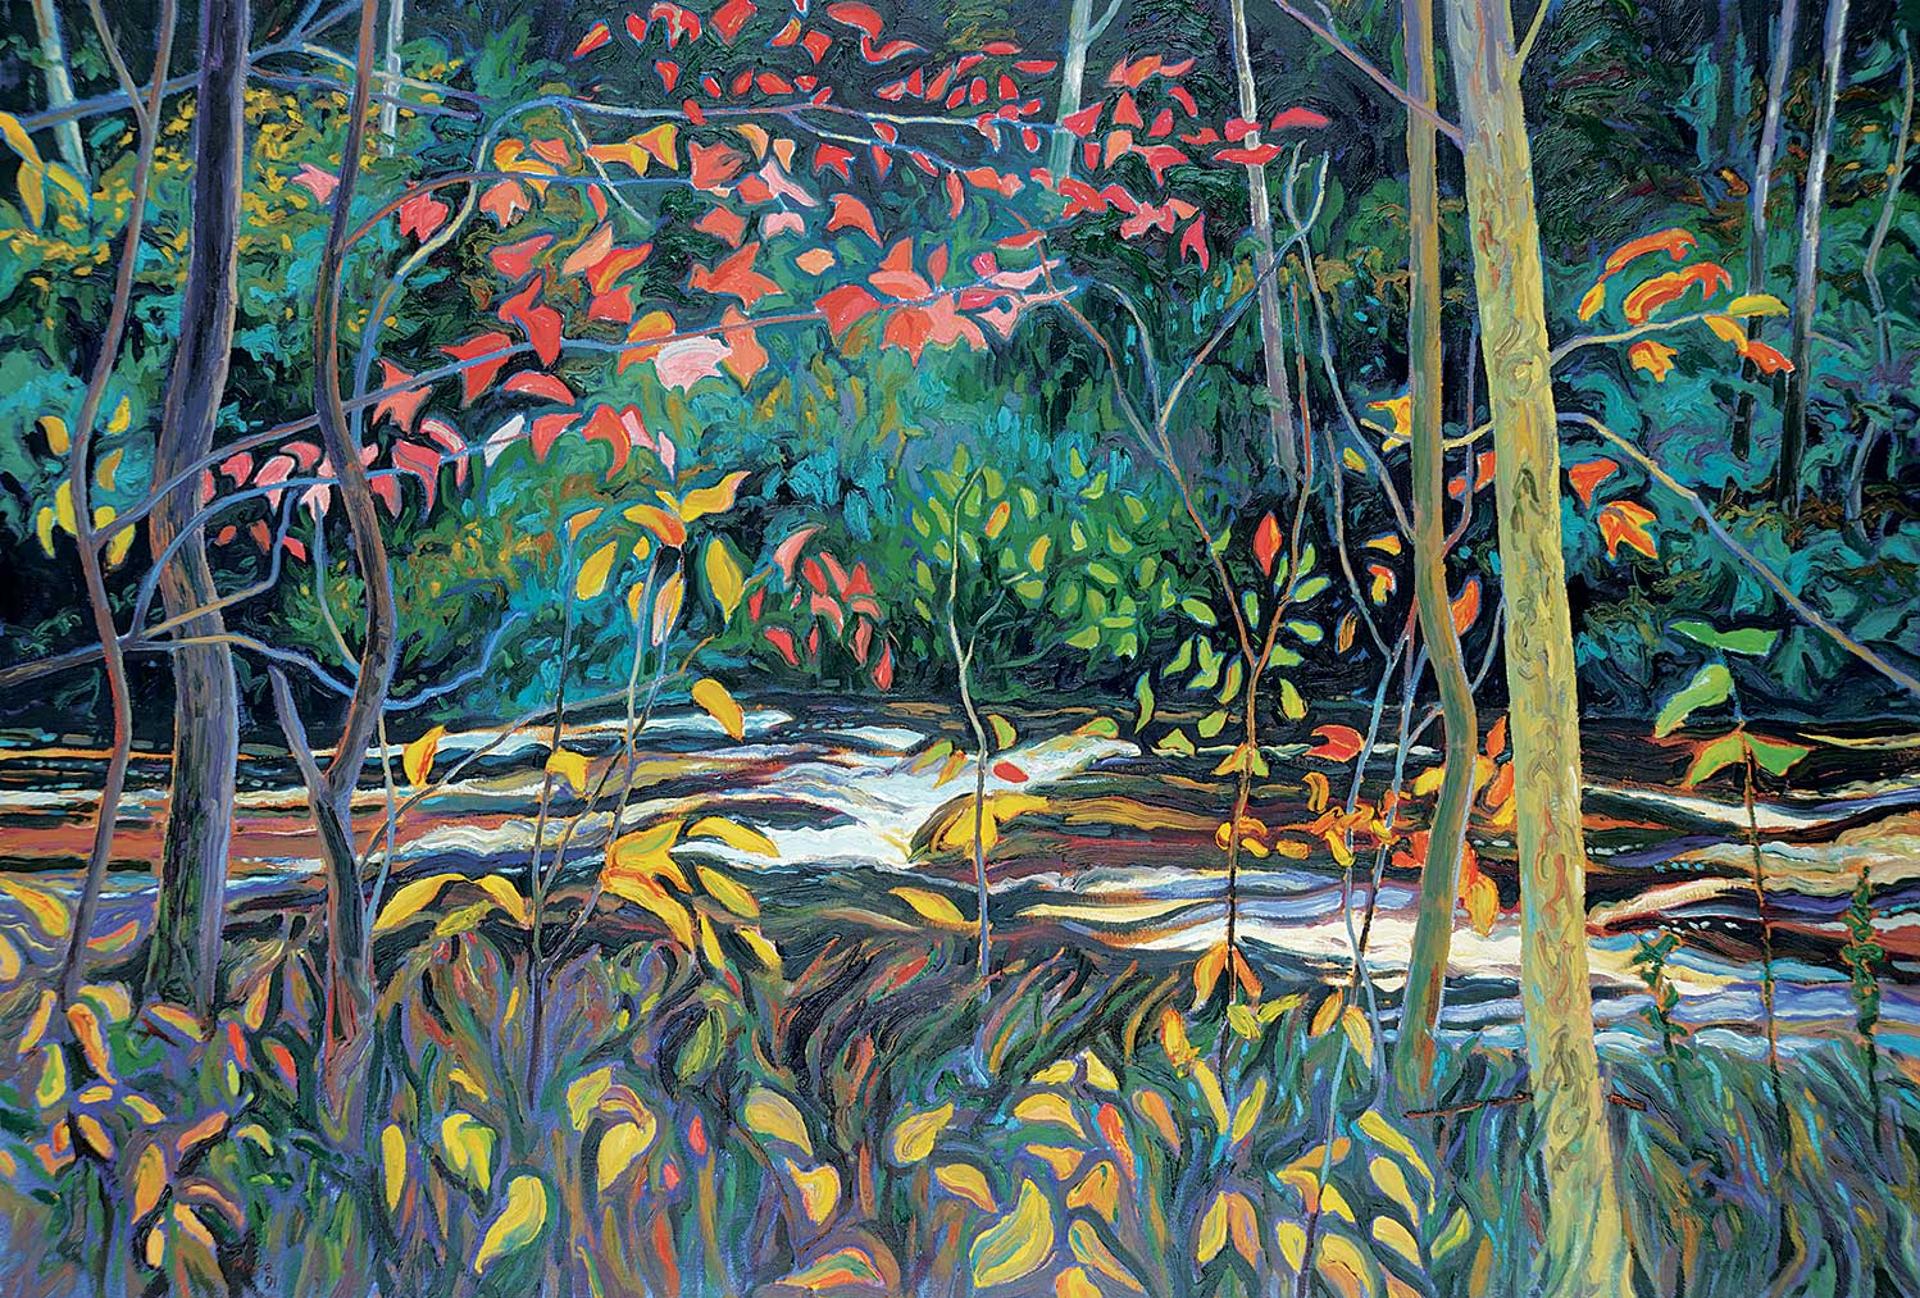 David John More (1947) - Water Forms - Middle River, N.B.